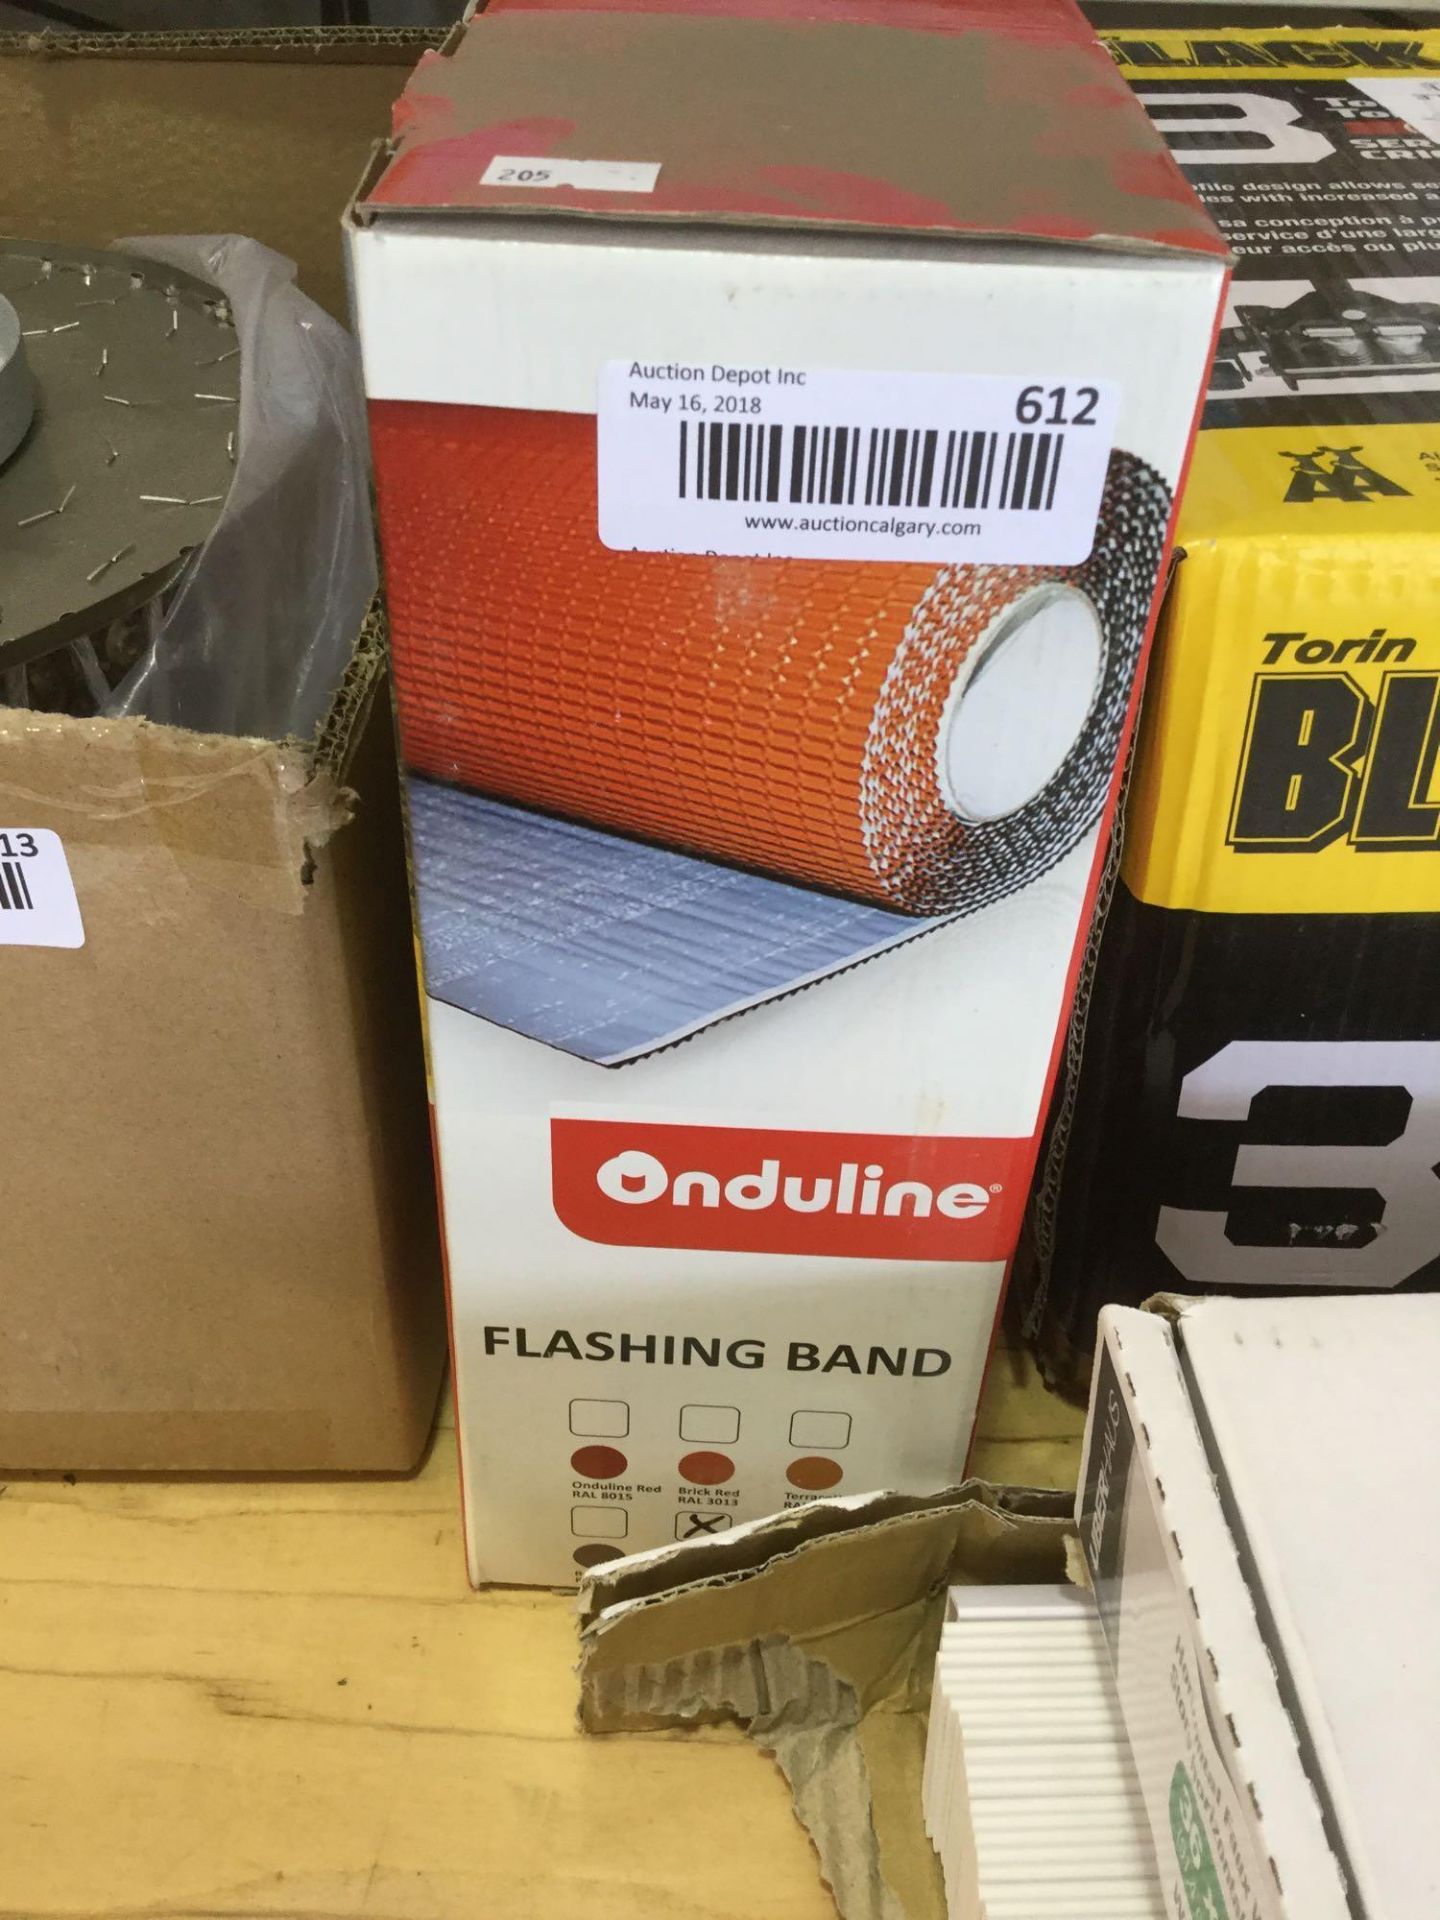 Onduline Flashing Band